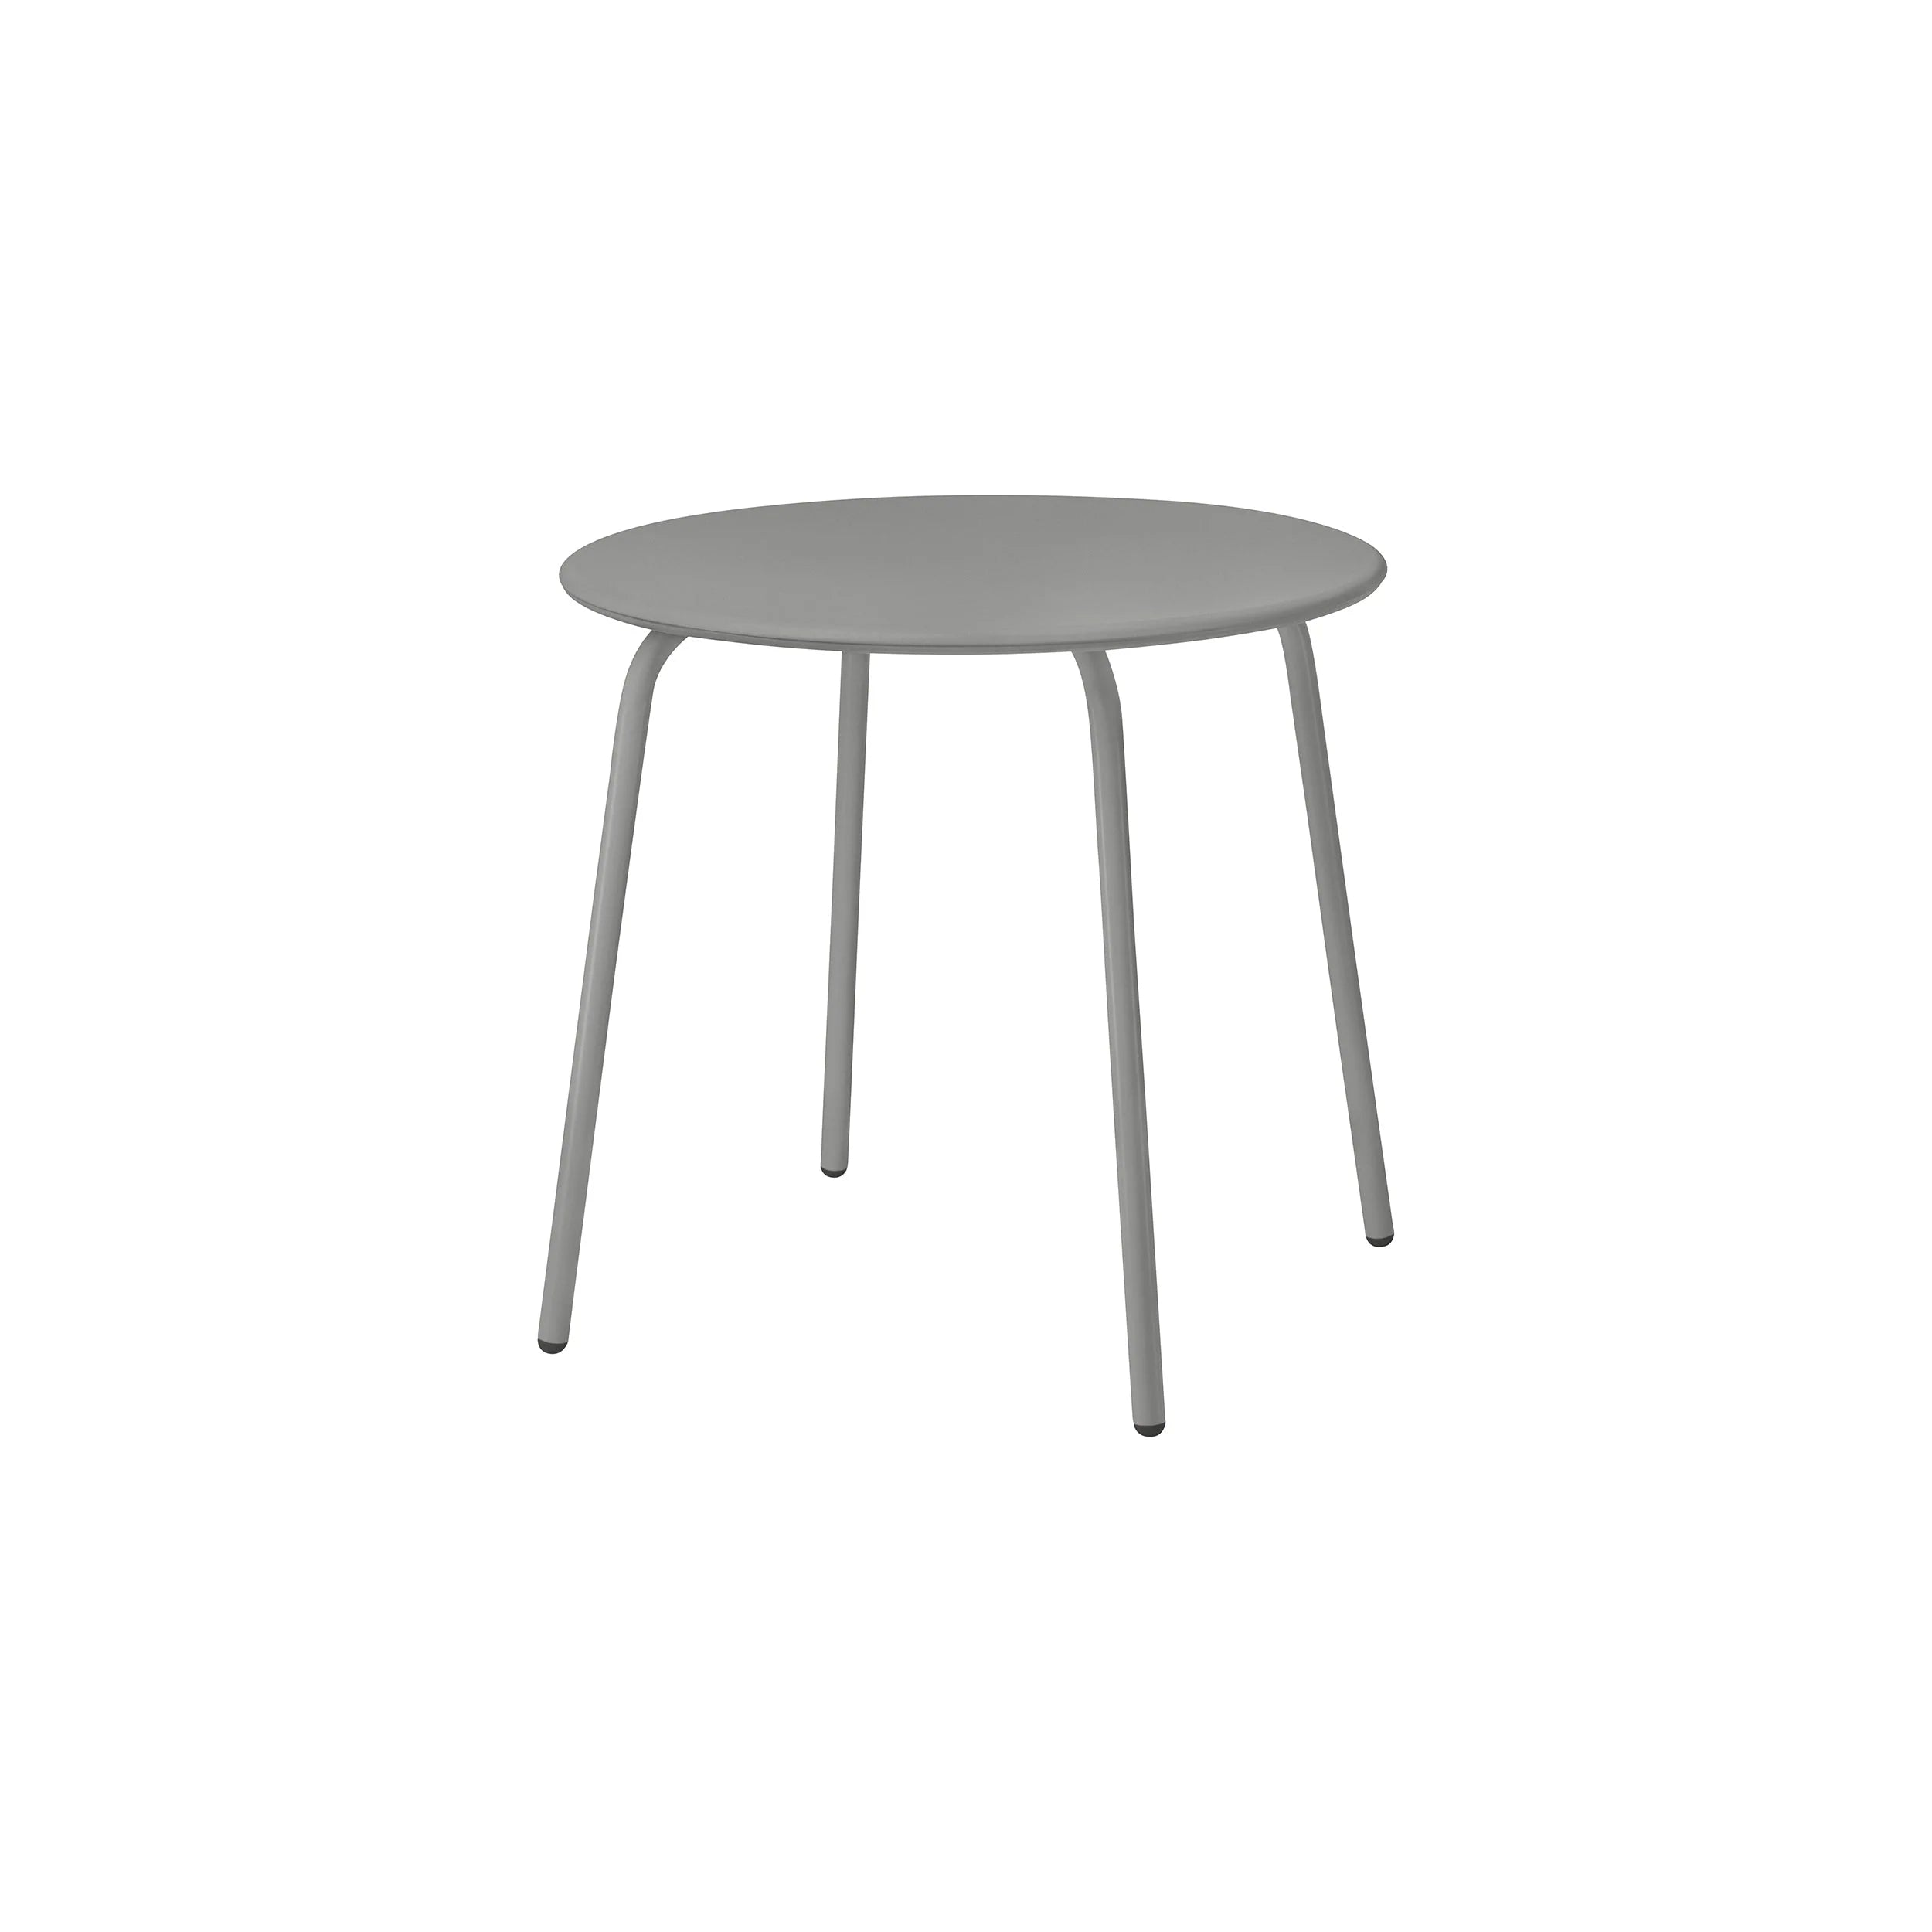 YUA Outdoor Round Bistro Table -Granite Grey